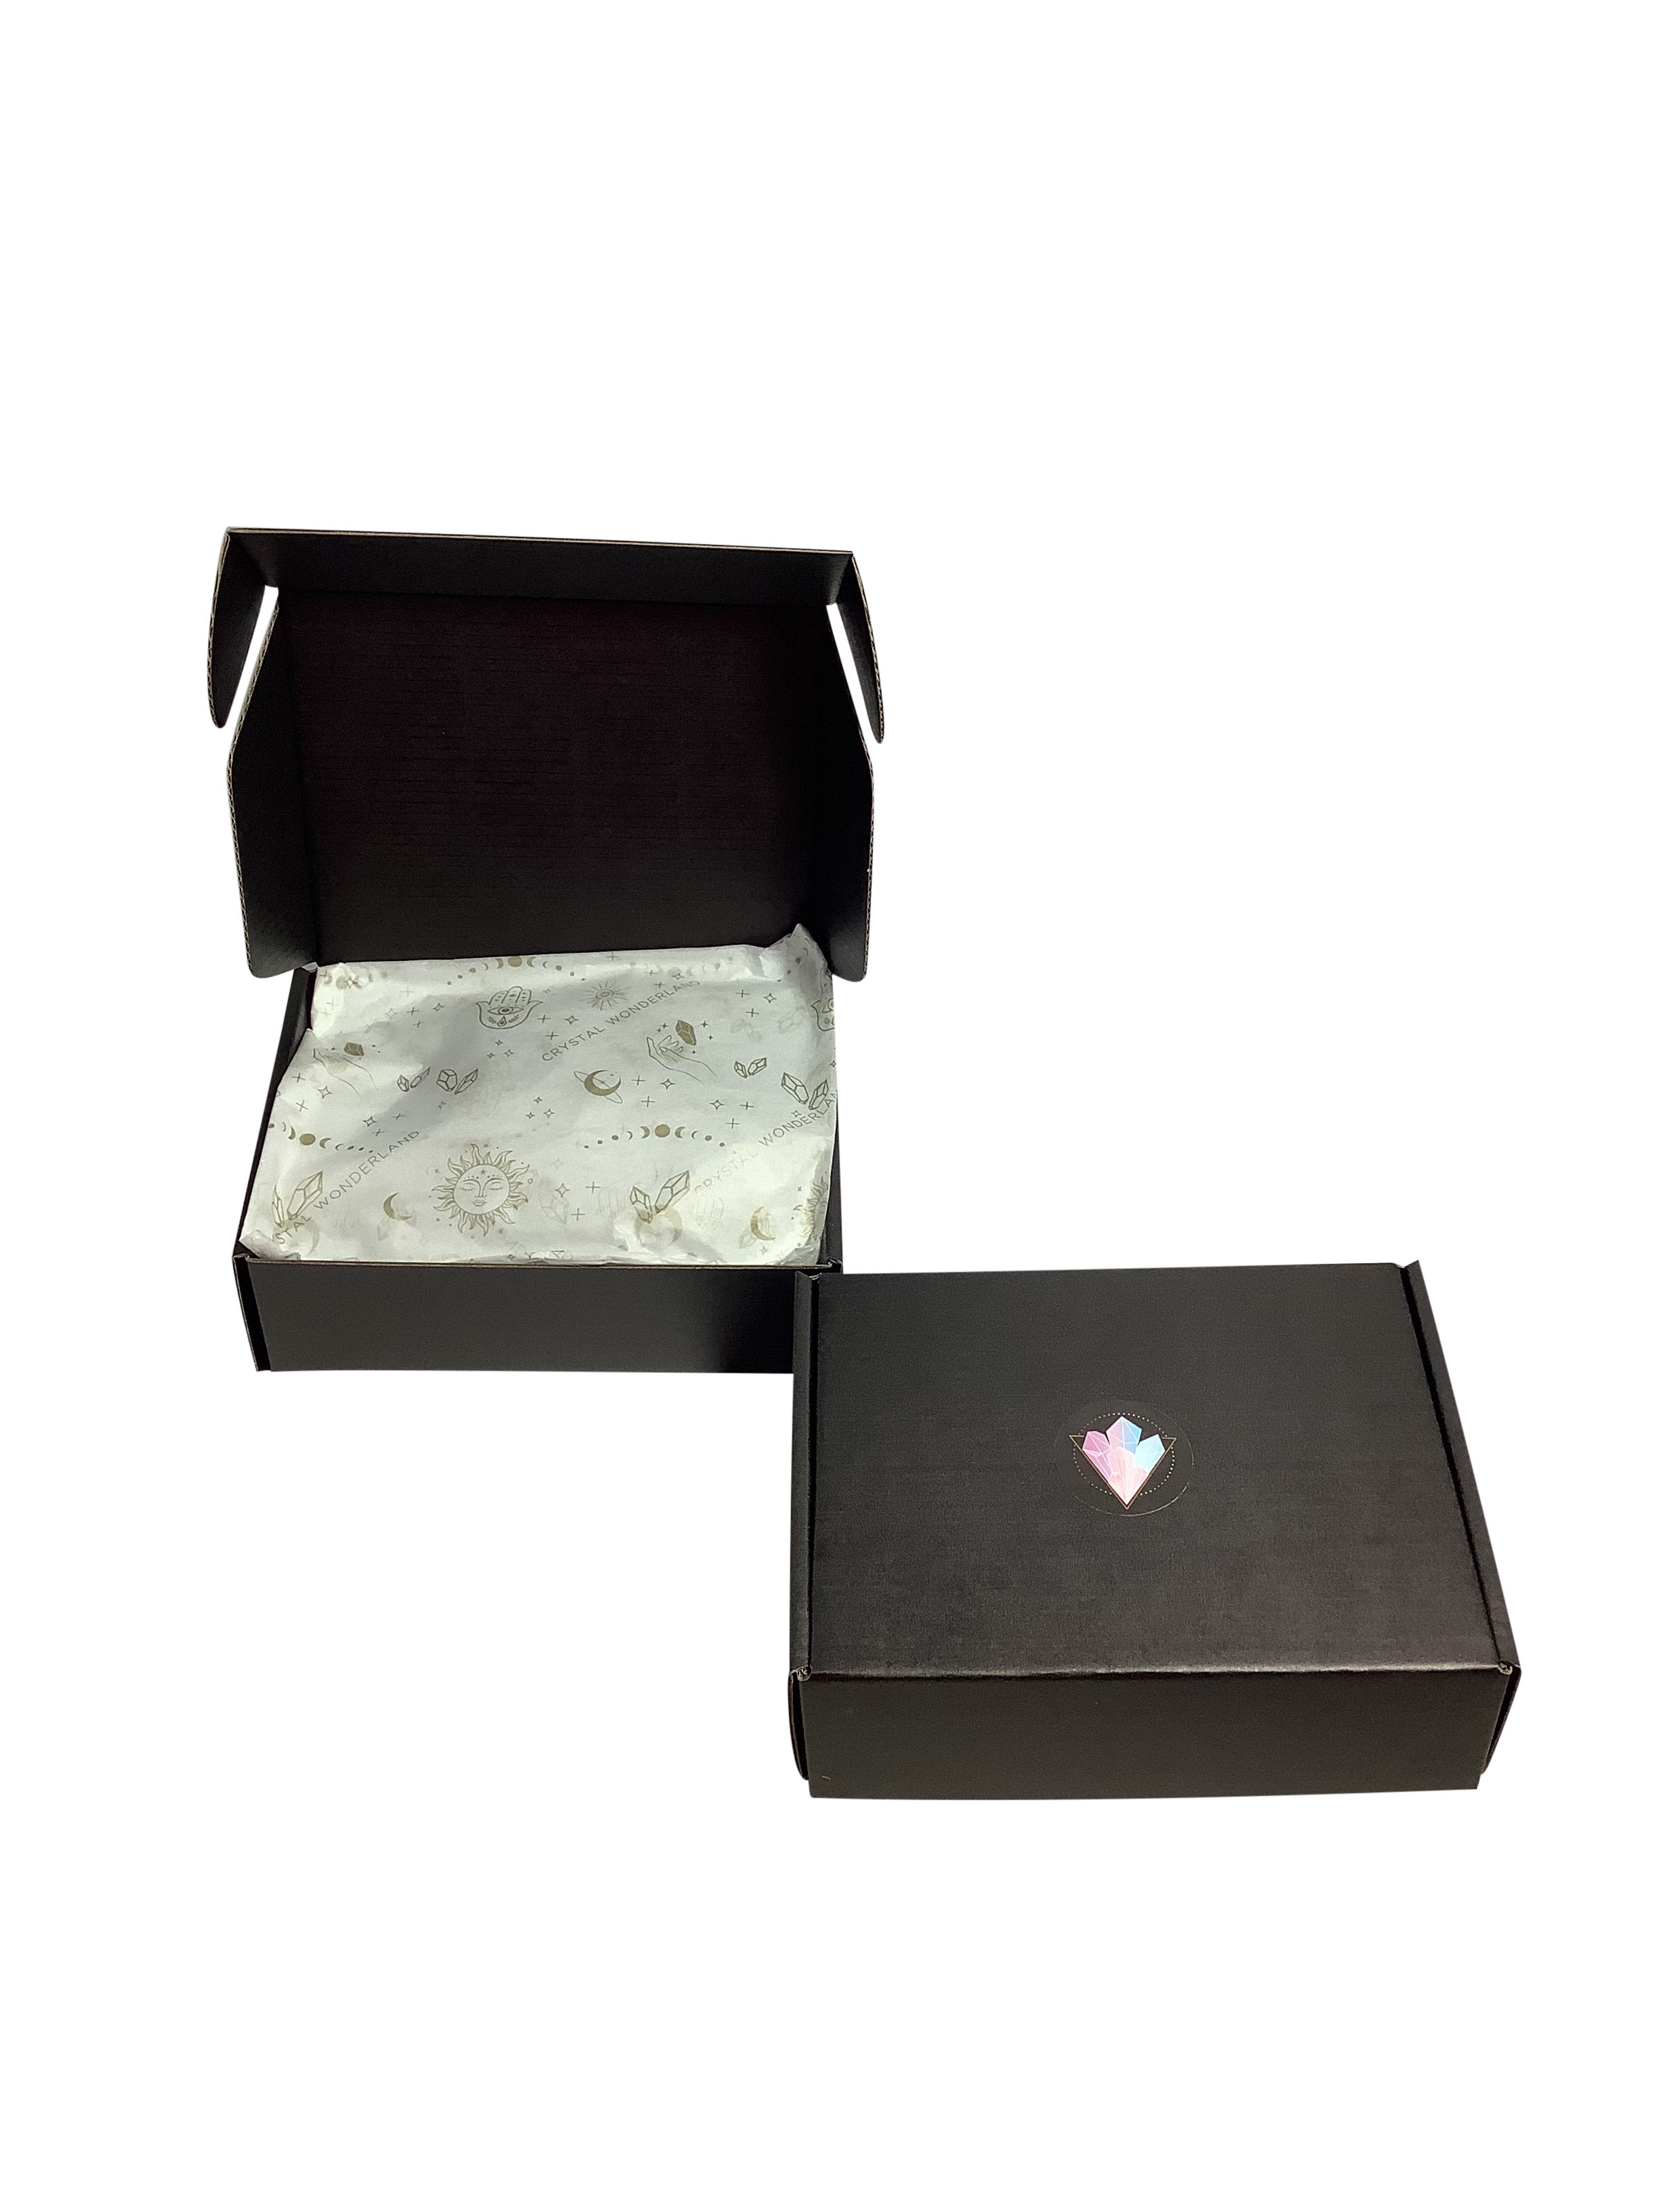 White Quartz Crystal Coaster Heart Shaped 4 Pieces Gold